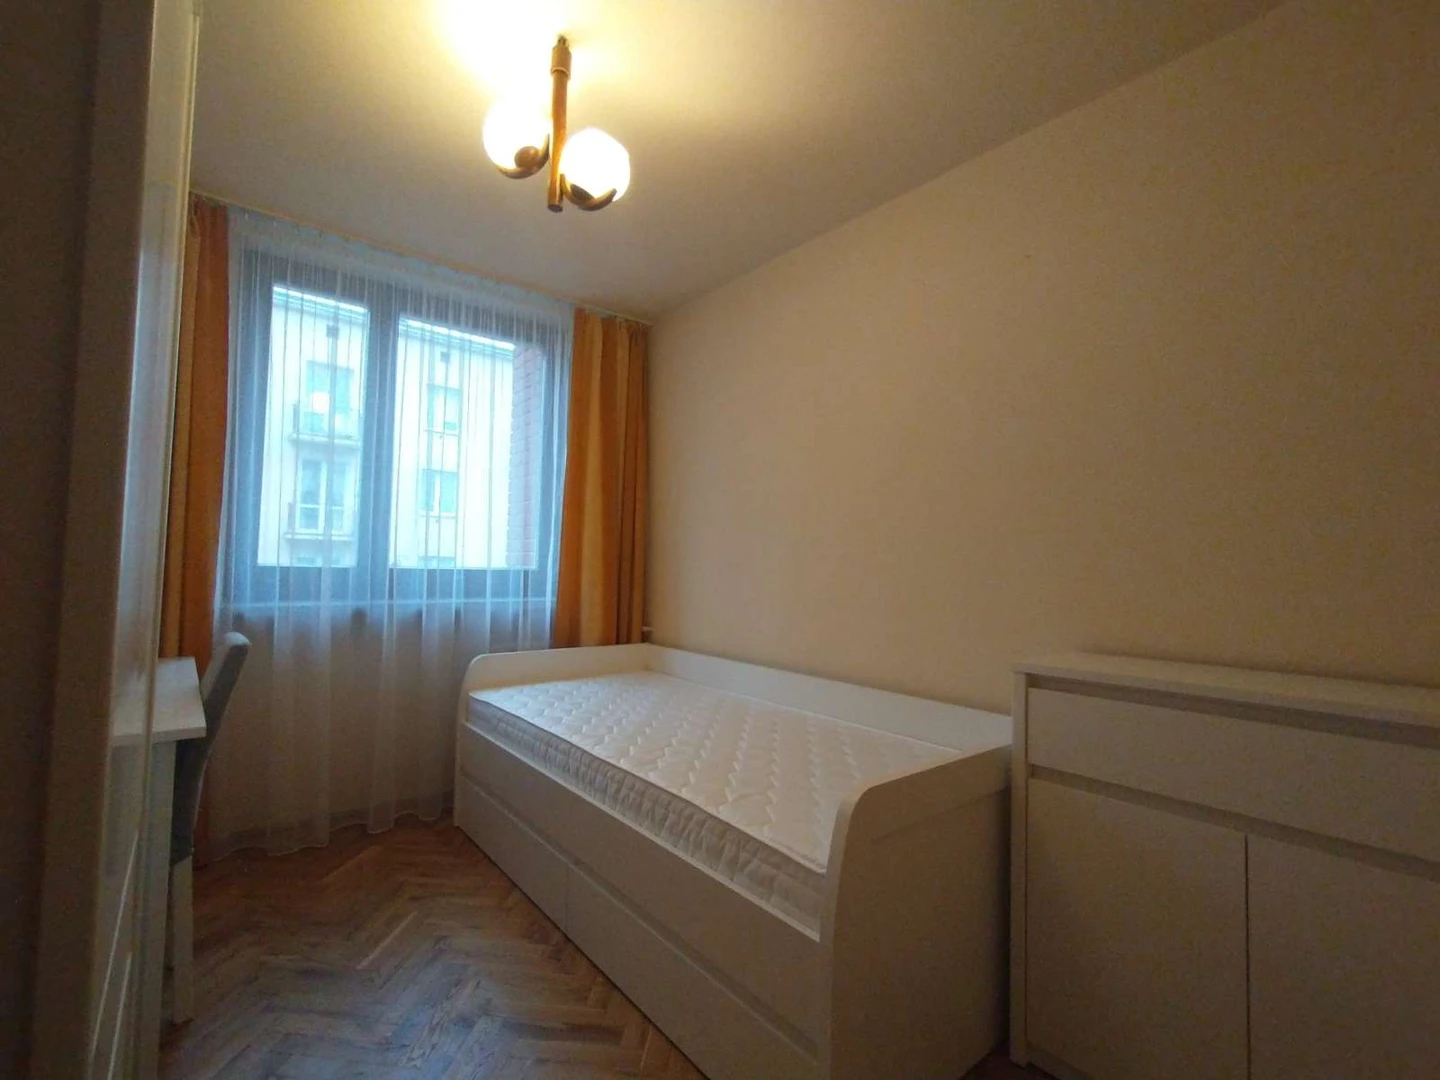 Lublin de ucuz özel oda